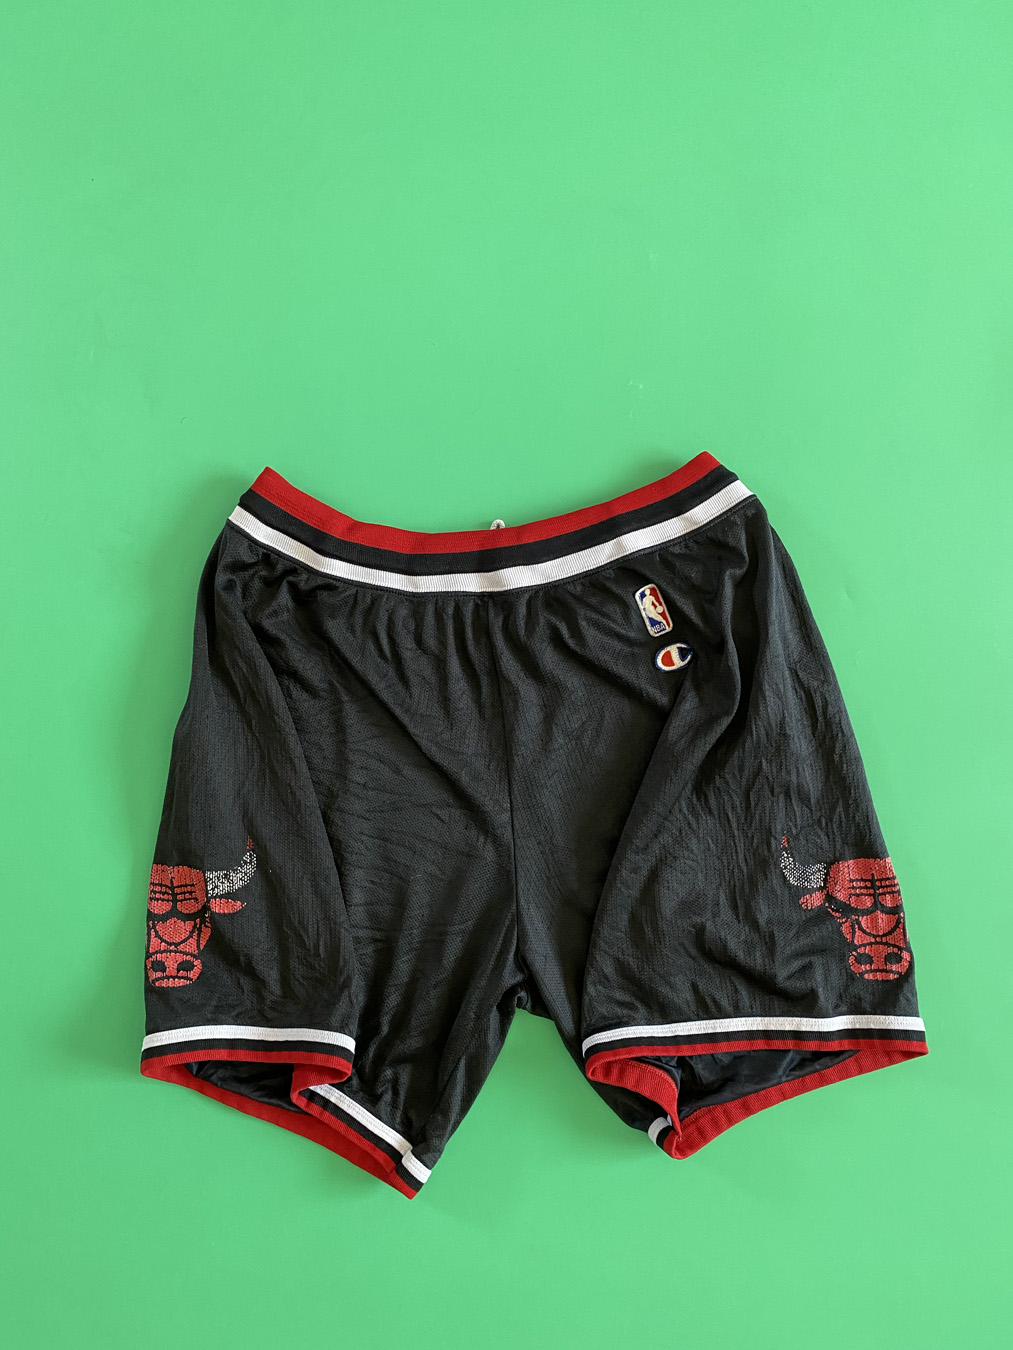 Vintage Nba Shorts 